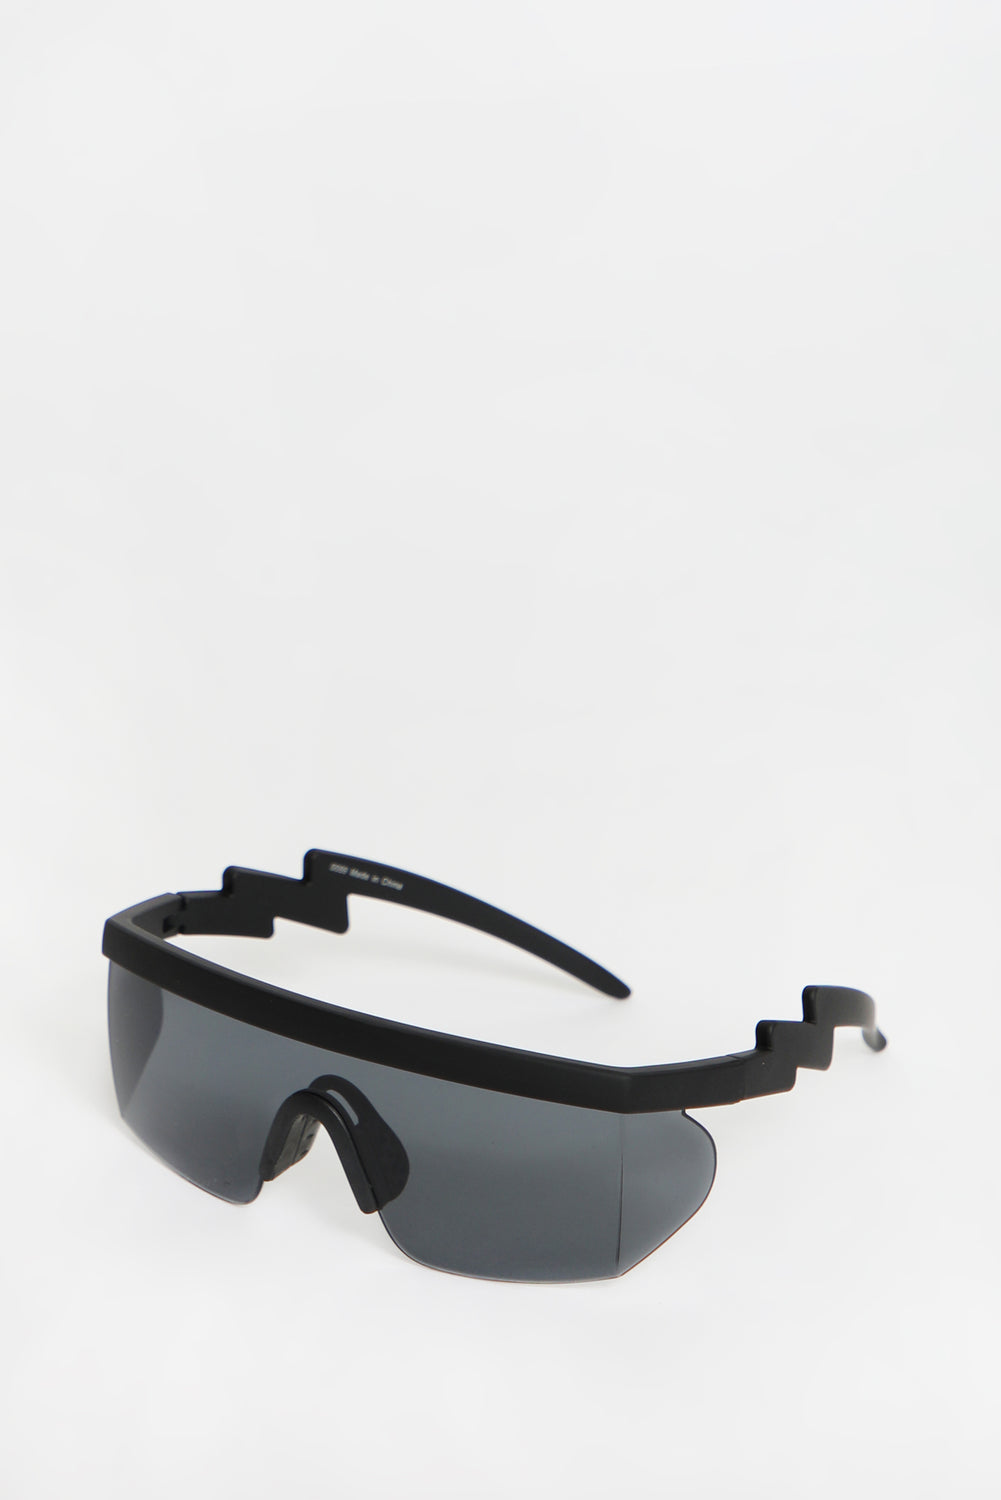 West49 Black Shield Sunglasses West49 Black Shield Sunglasses